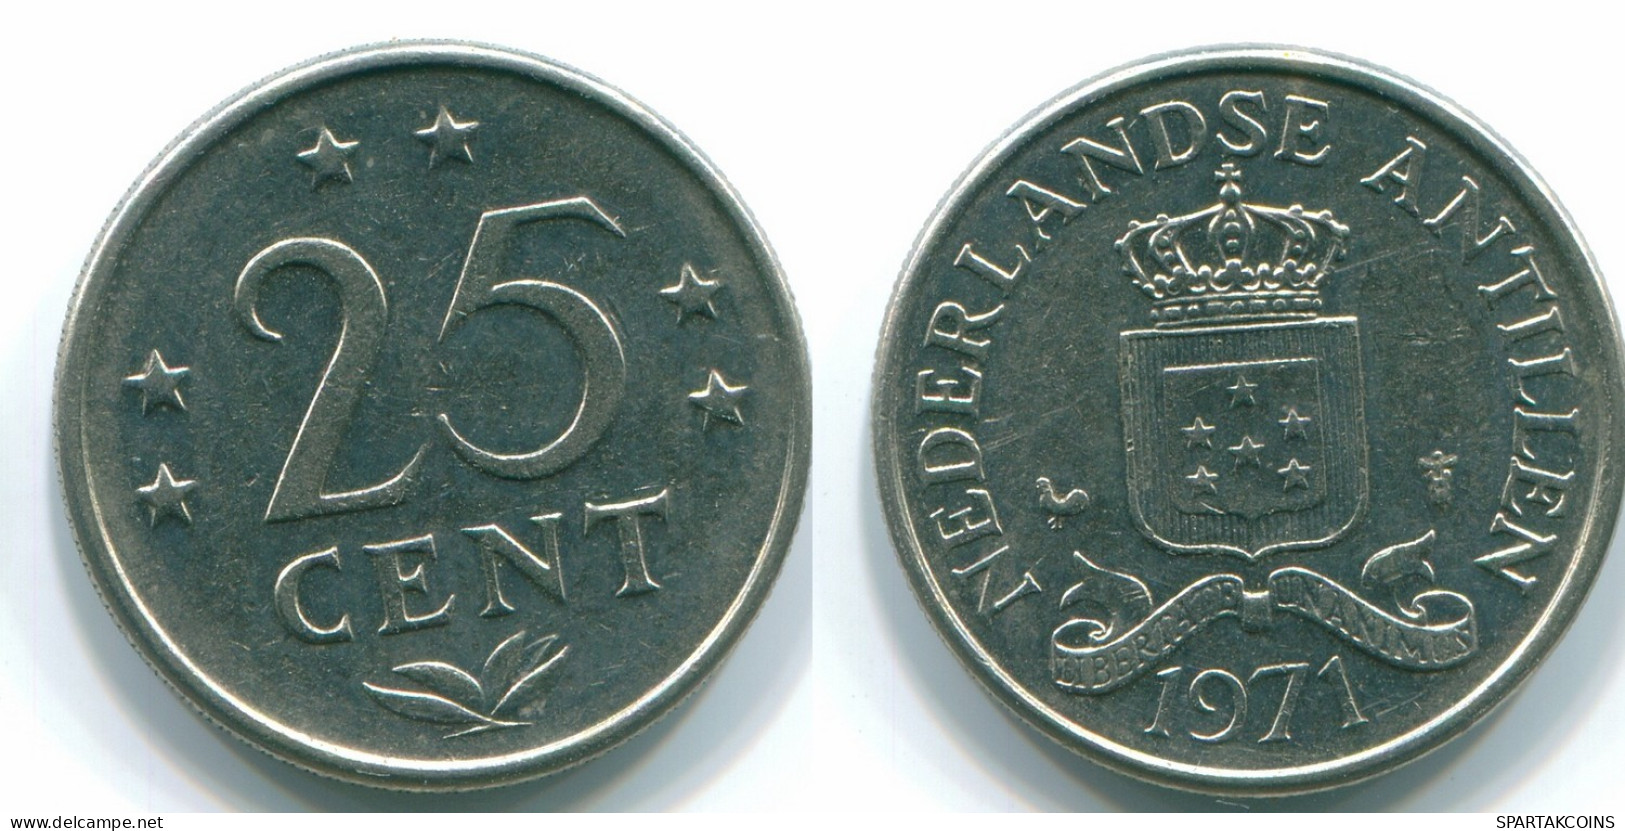 25 CENTS 1971 NETHERLANDS ANTILLES Nickel Colonial Coin #S11528.U.A - Antilles Néerlandaises